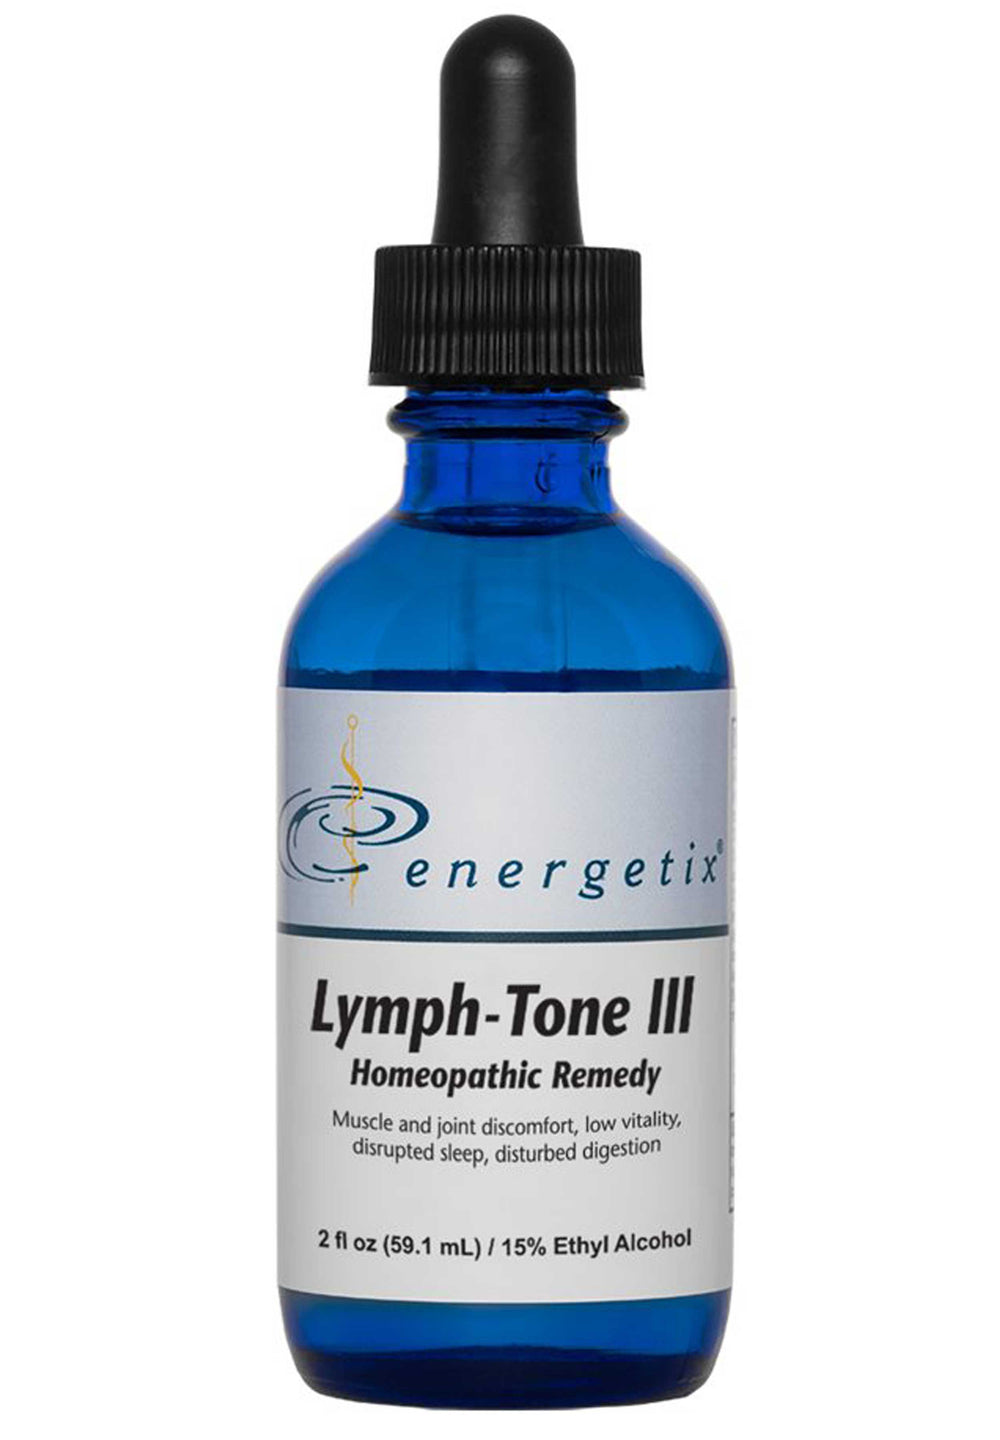 Lymph-Tone III